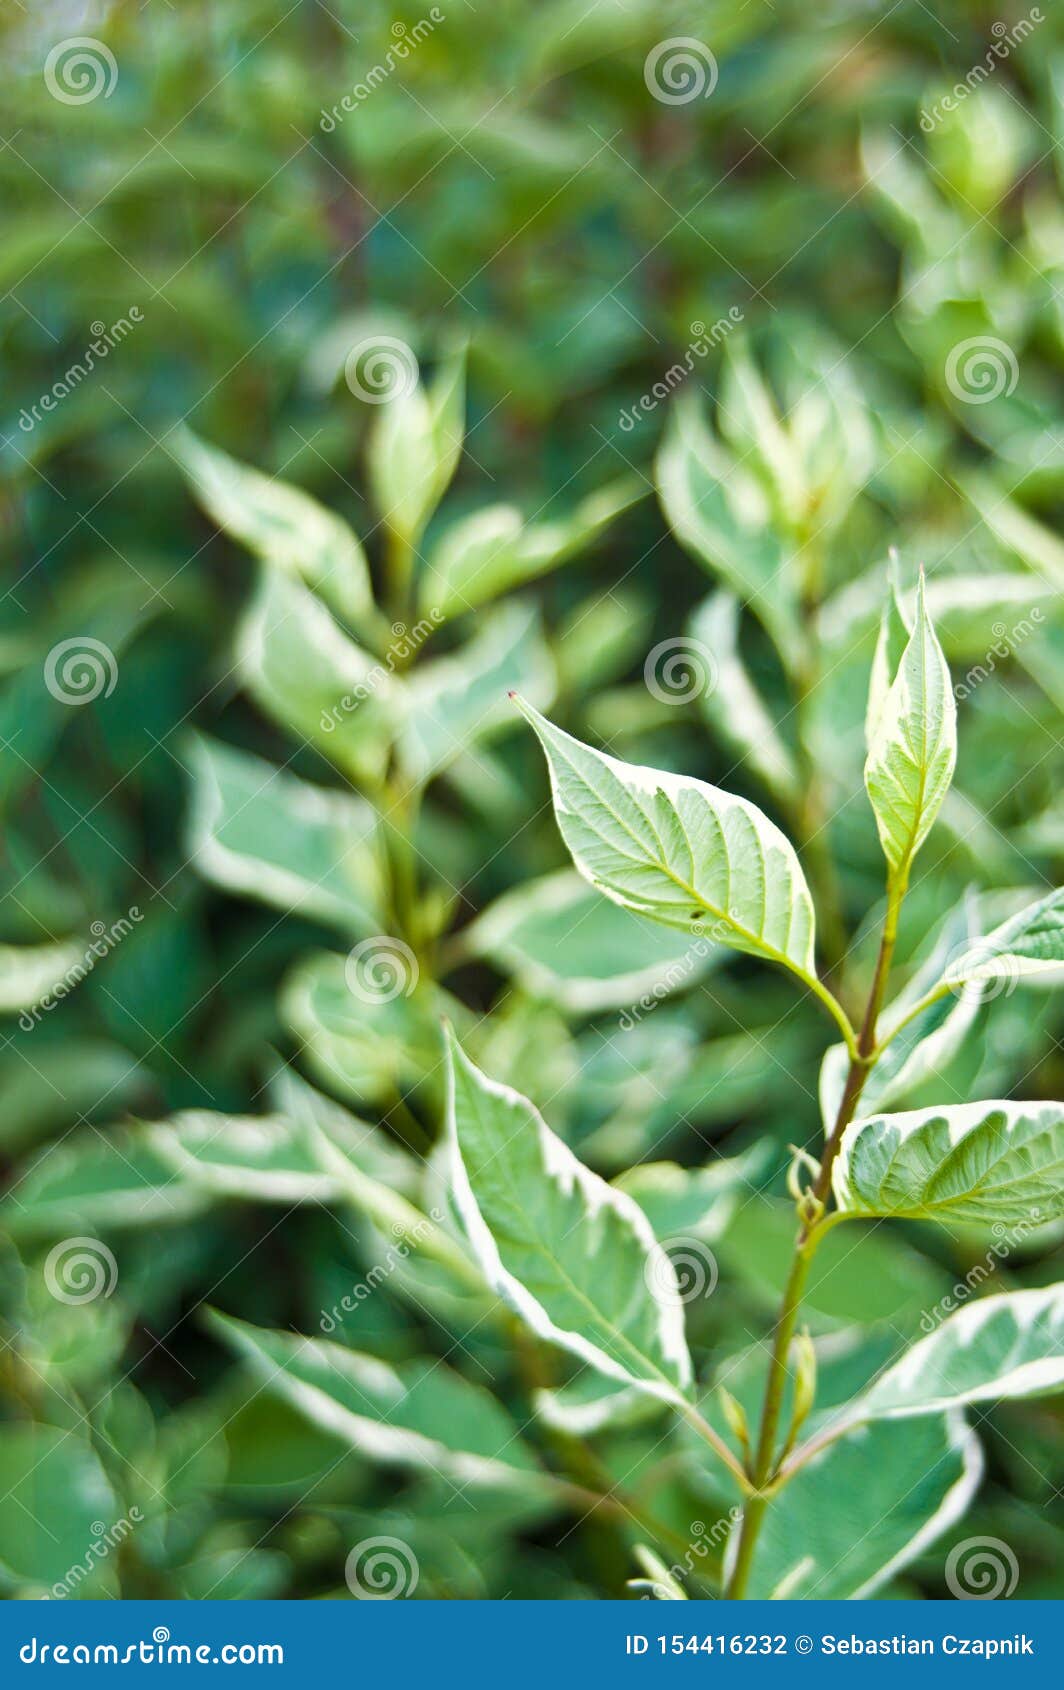 siberian dogwood cornus alba light green leaves